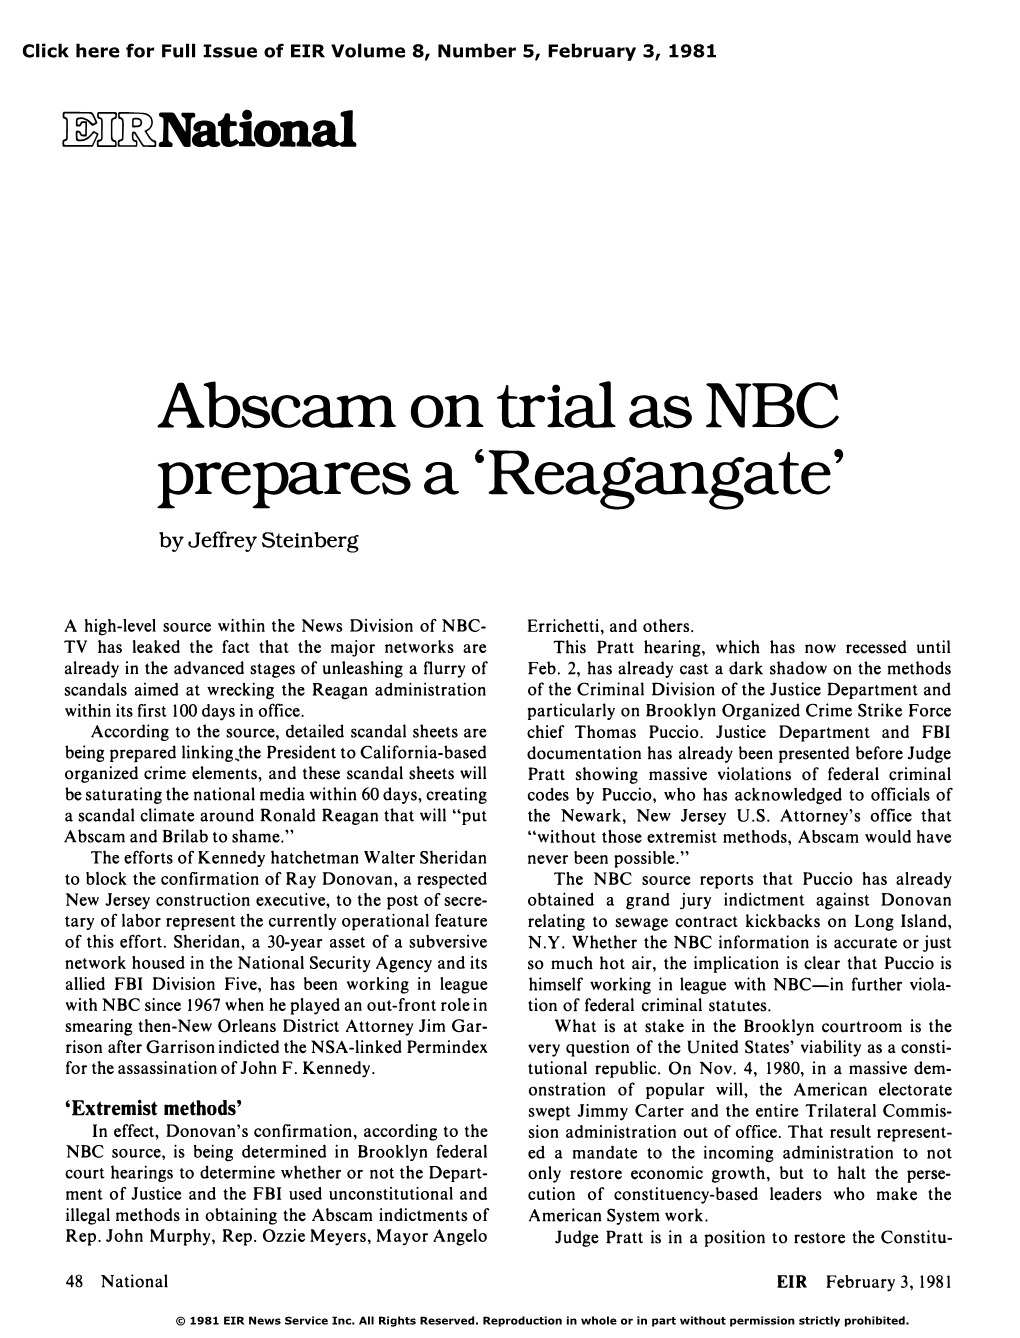 Abscam on Trial As NBC Prepares a 'Reagangate'